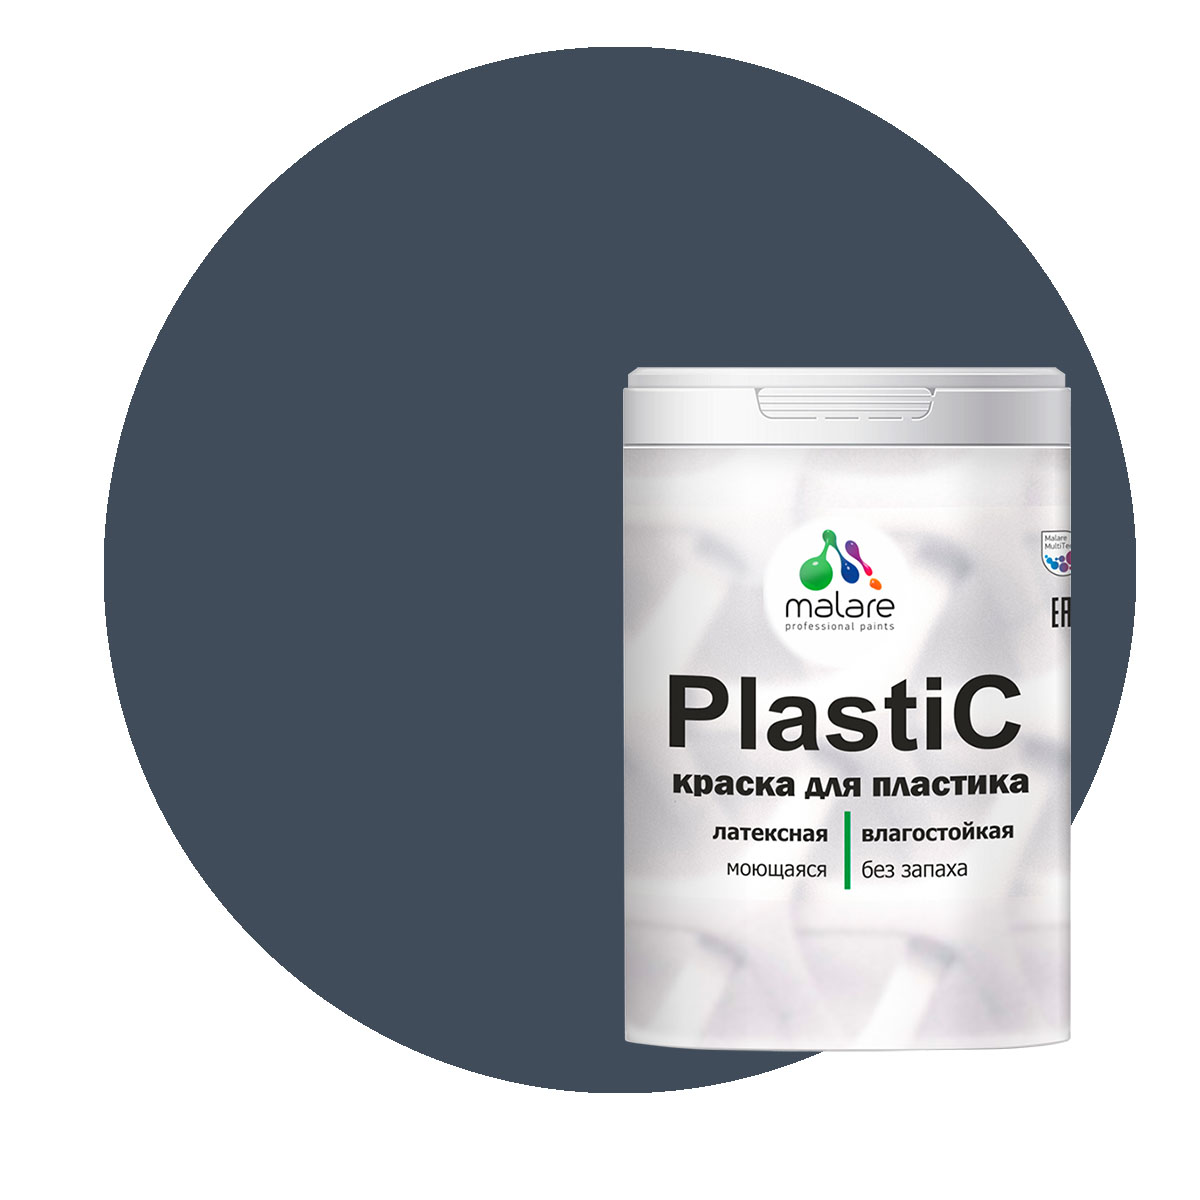 Краска Malare PlastiC для пластика, ПВХ, для сайдинга, гранитный, 2 кг. краска malare plastic для пластика пвх для сайдинга античная латунь 2 кг